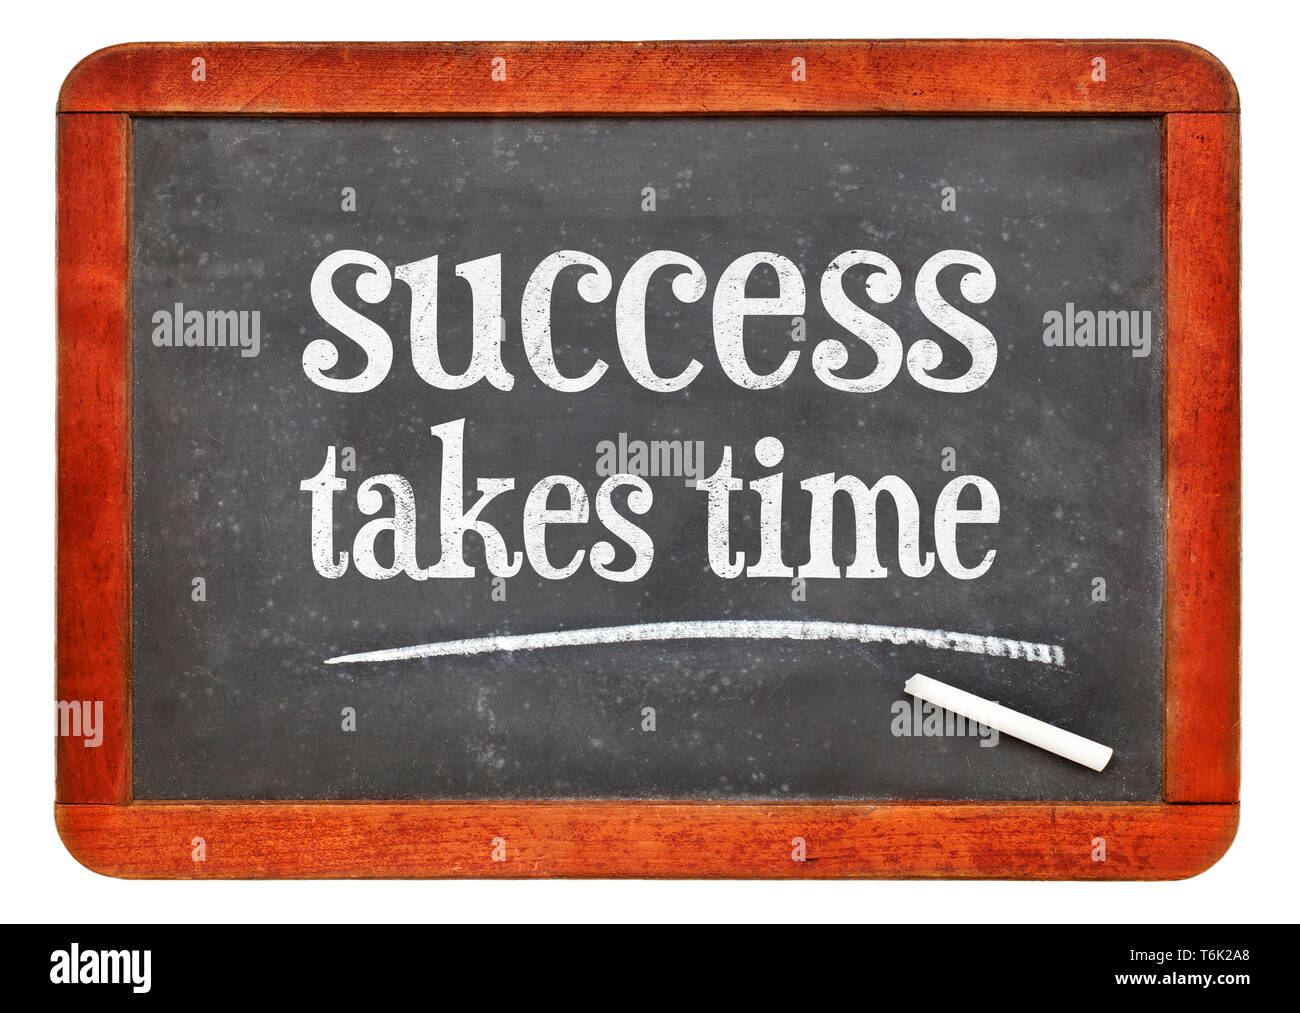 success takes time  - white chalk text on a vintage slate blackboard Stock Photo